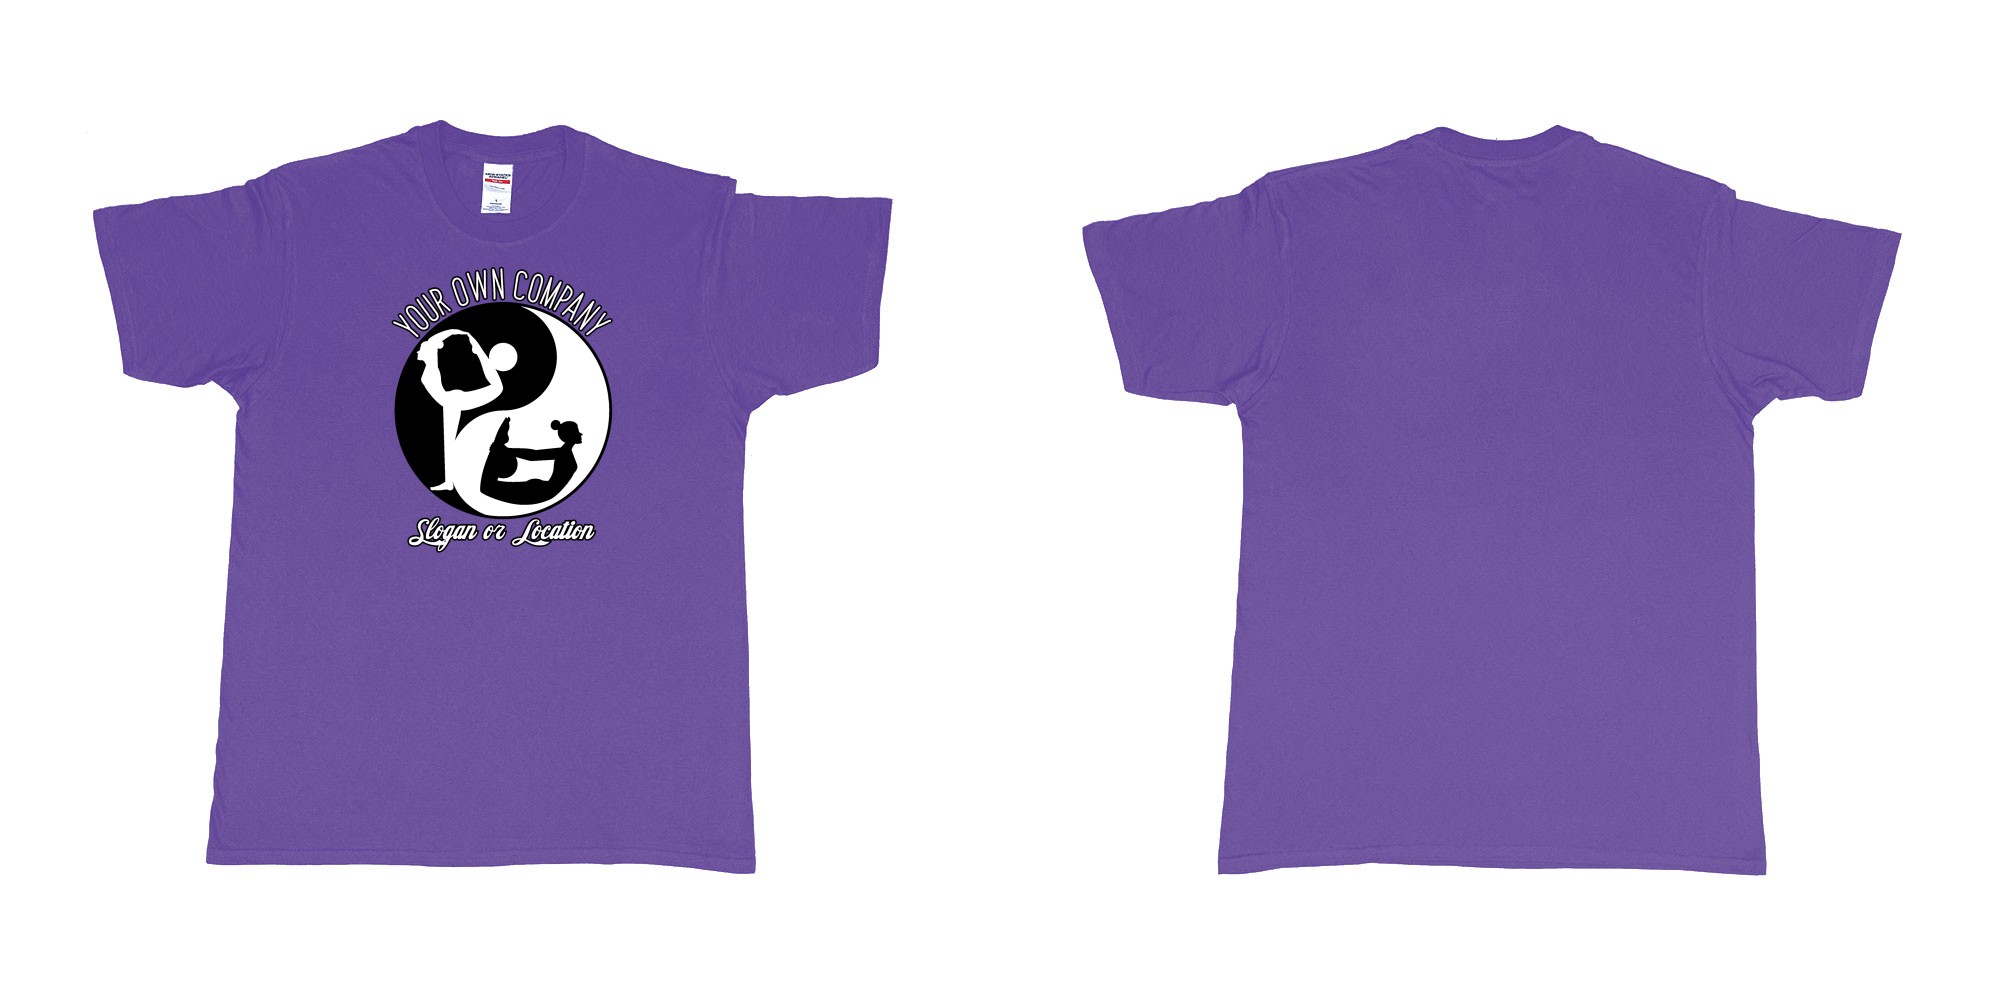 Custom tshirt design yin yang yoga balance custom studio t shirt in fabric color purple choice your own text made in Bali by The Pirate Way